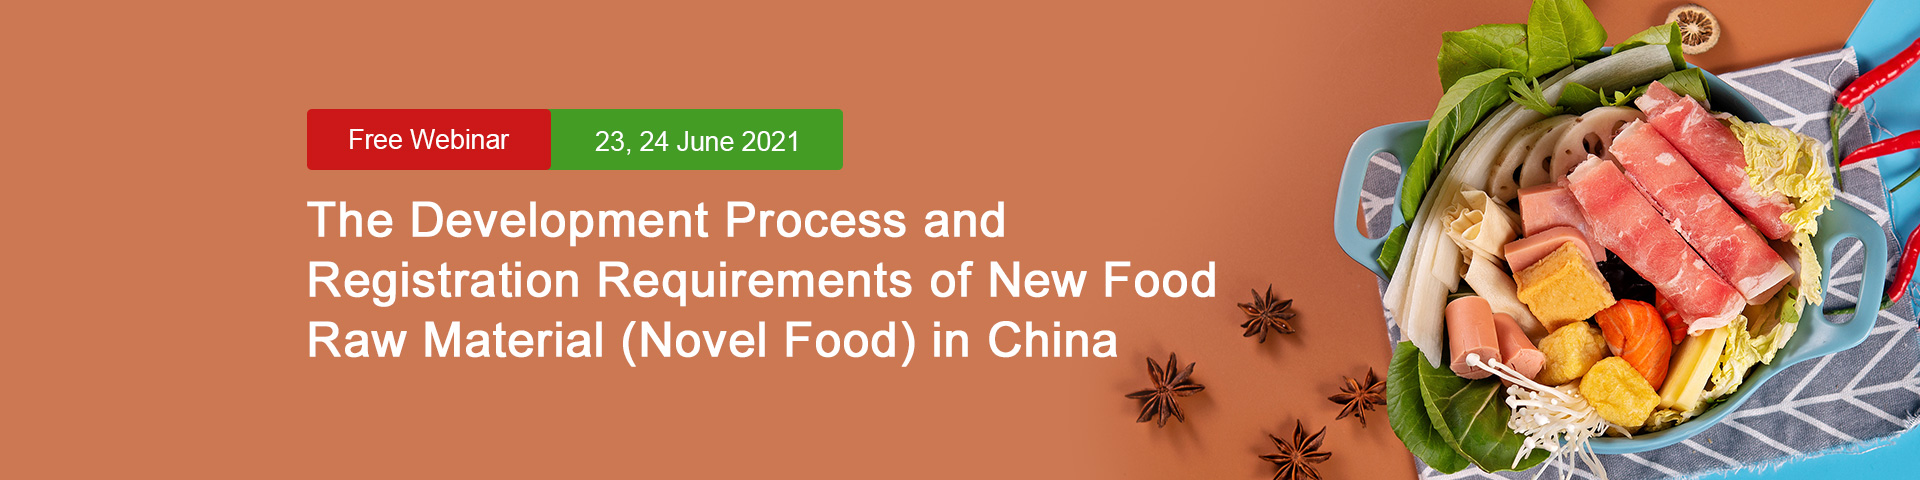 China,Food,Webinar,Novel,Registration,Requirements,